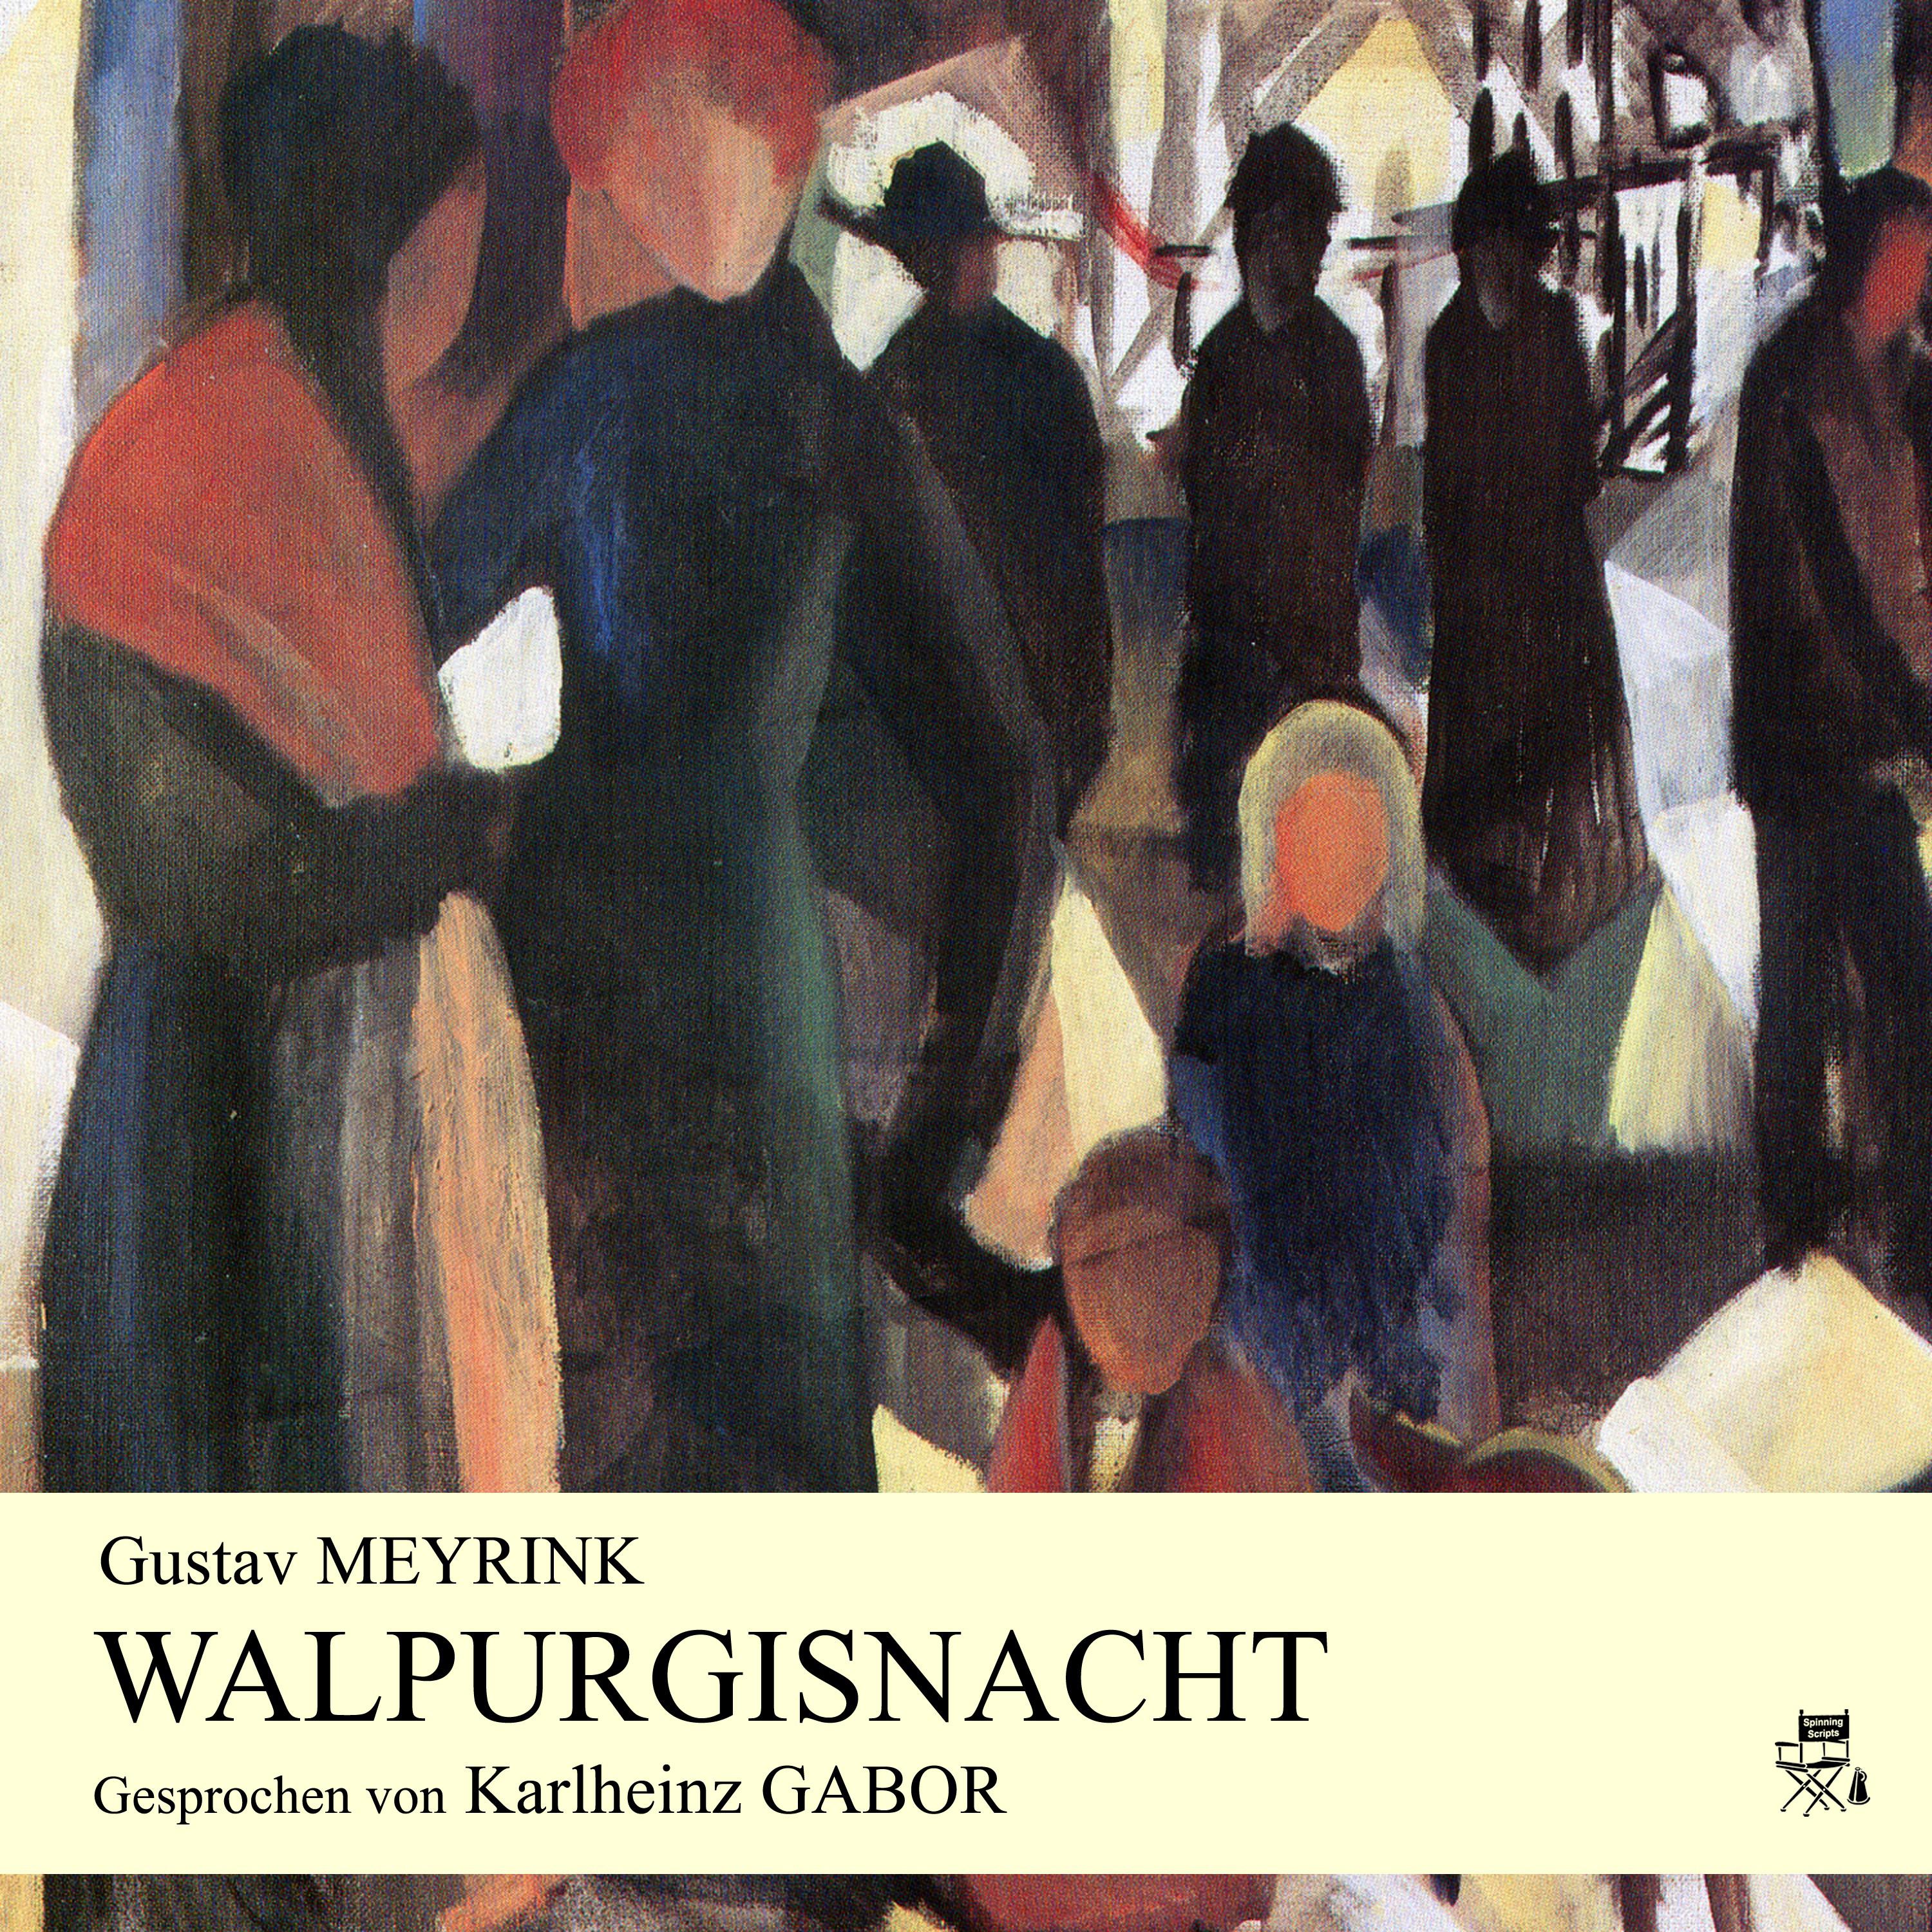 Kapitel 7: Walpurgisnacht (Teil 25)